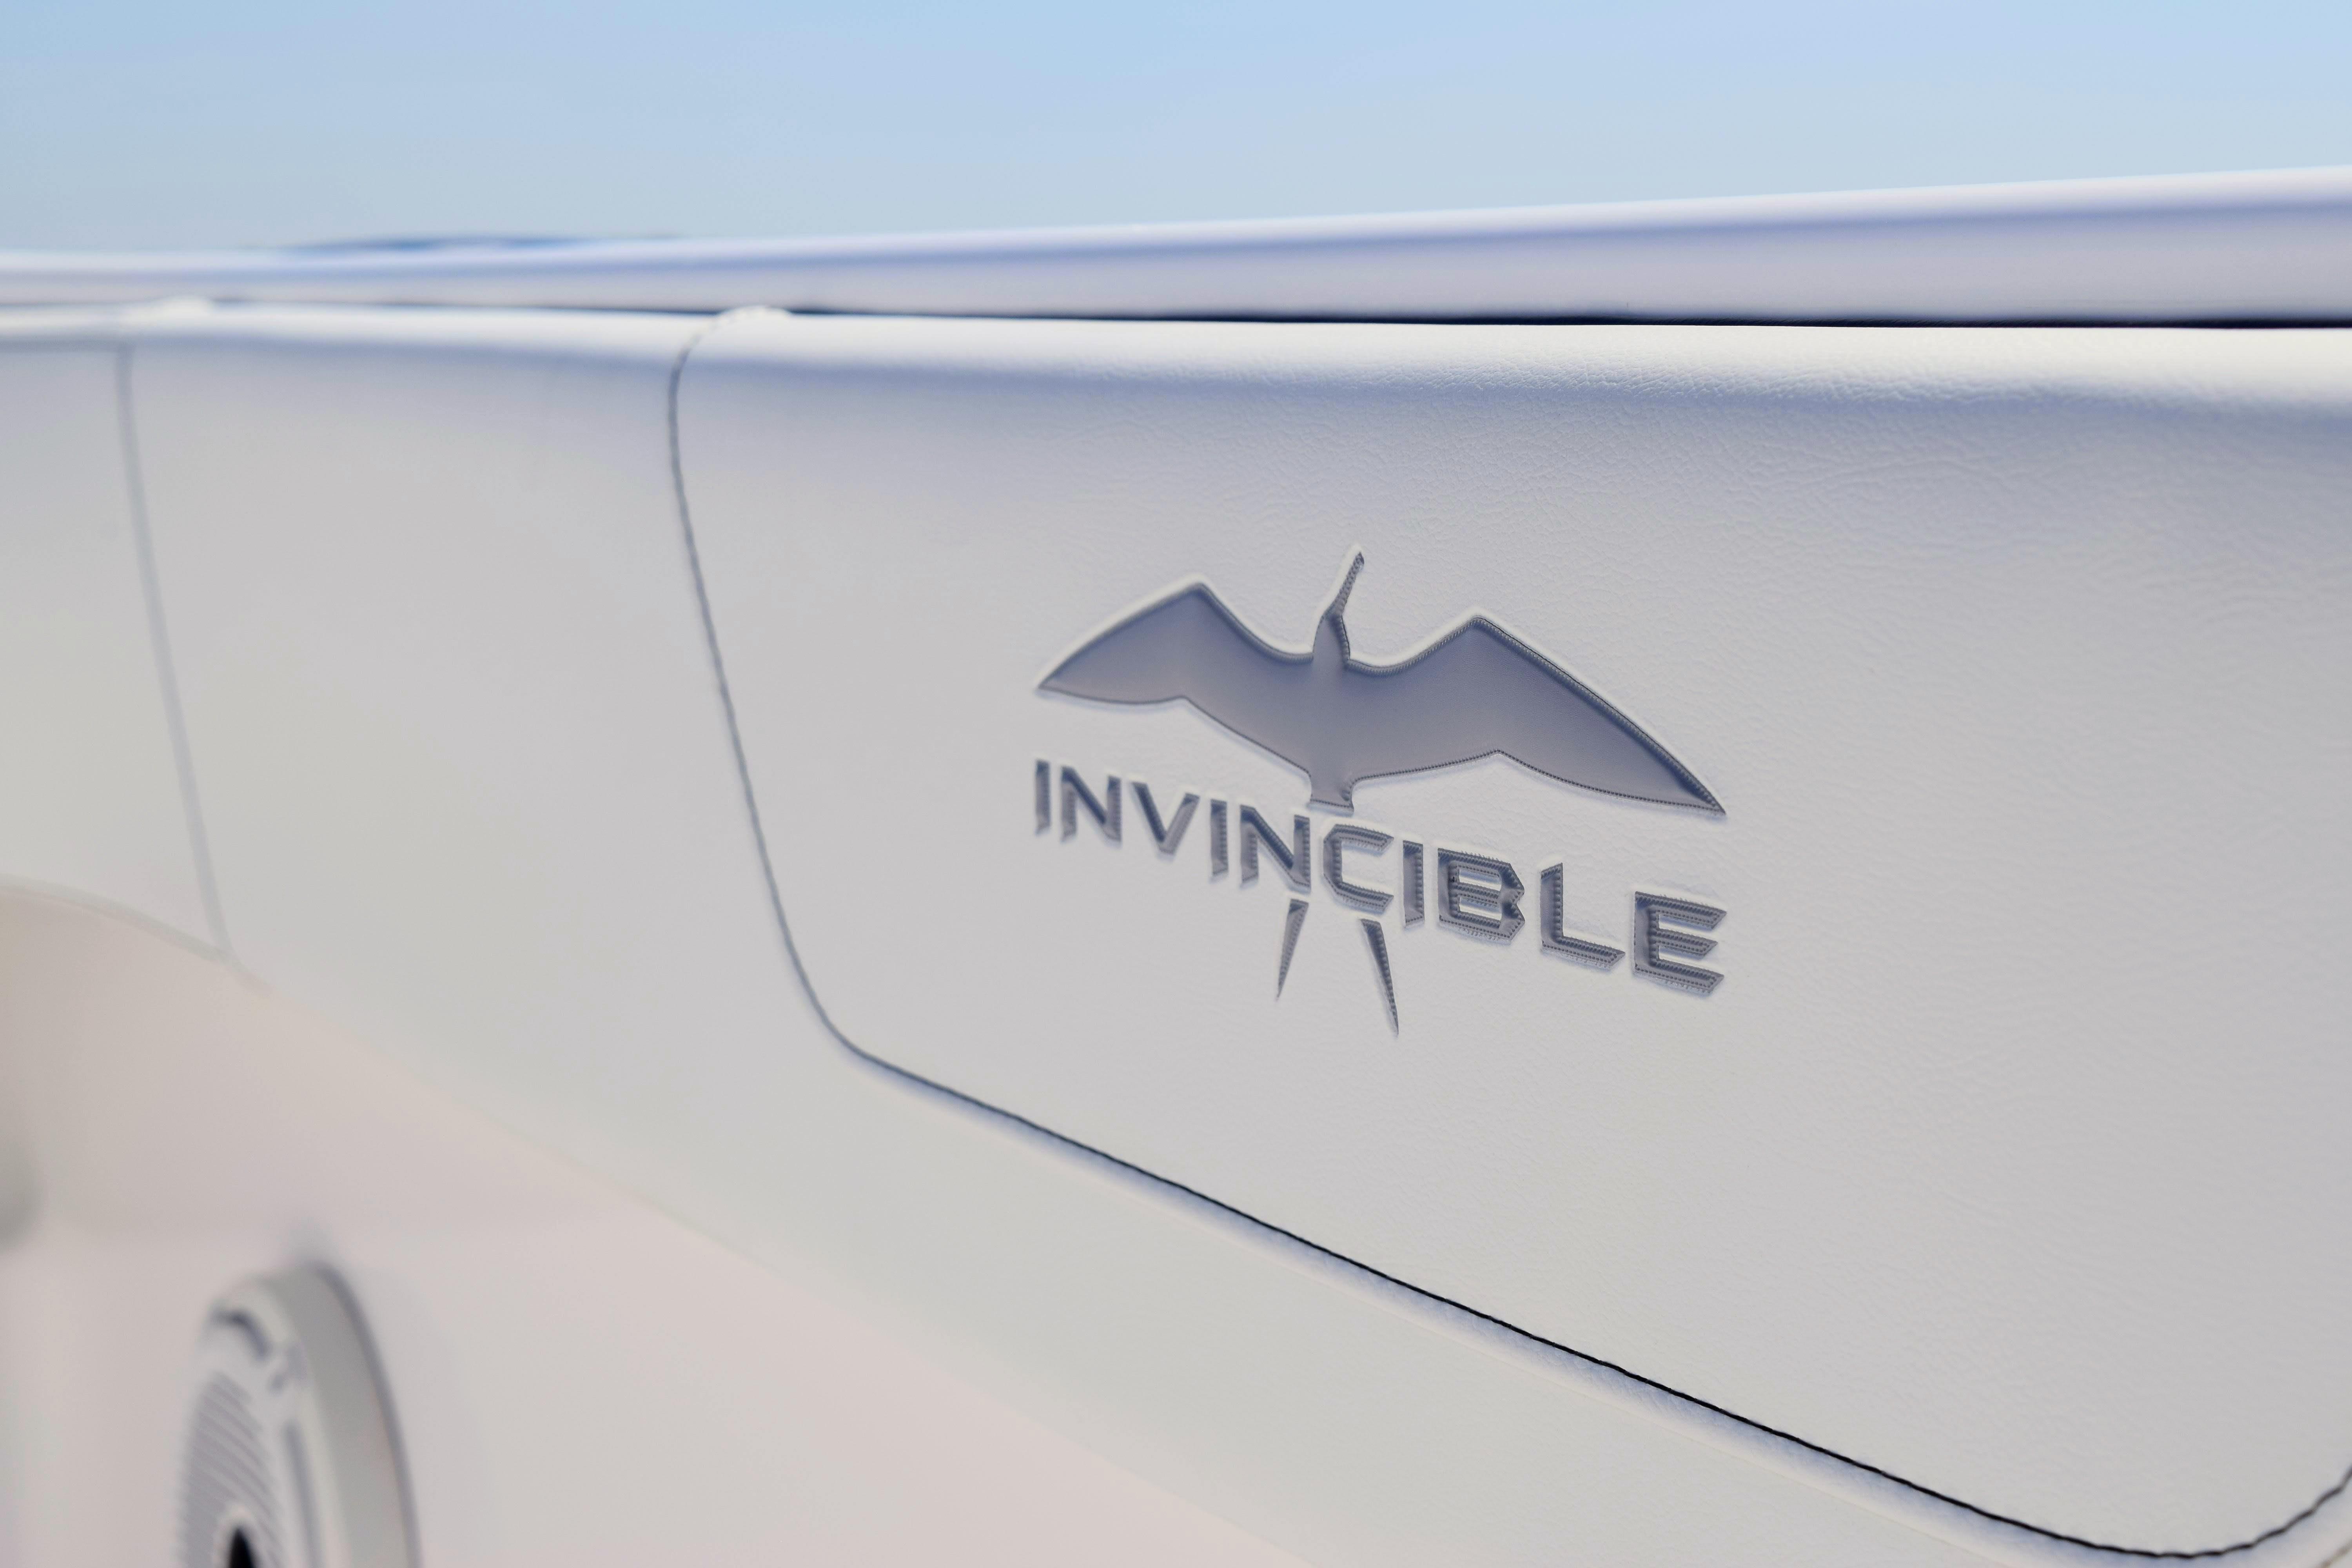 Invincible 35 Catamaran- Gunnel